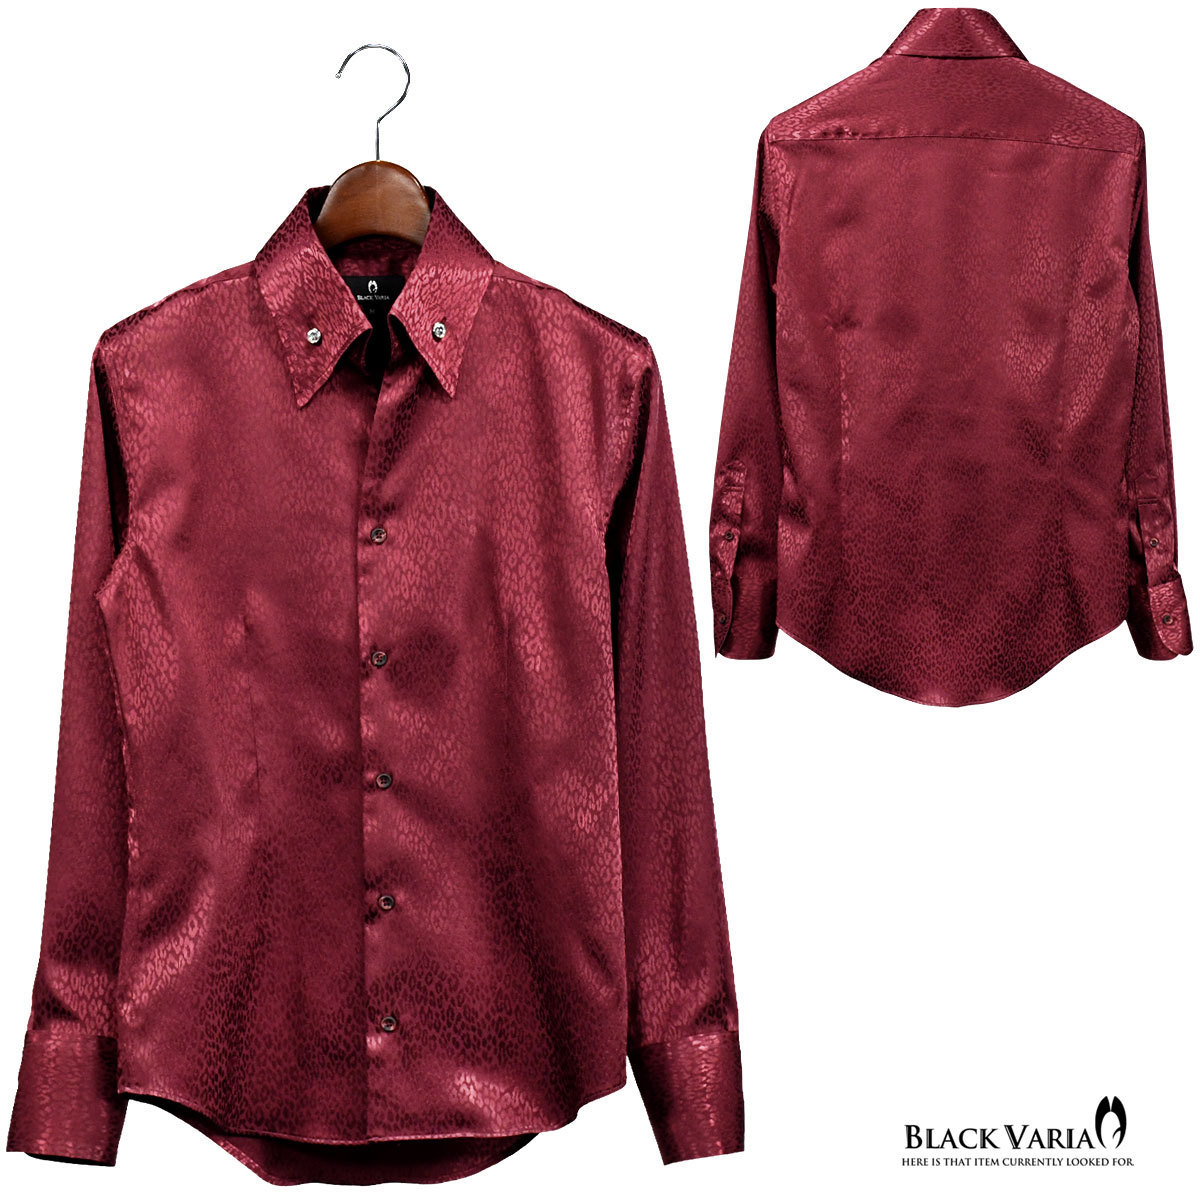 191853-winS BLACK VARIA ジャガード豹柄 スキッパー スワロフスキーBD ドレスシャツ スリム メンズ(クリスタル釦 ワイン赤) L 衣装_画像6